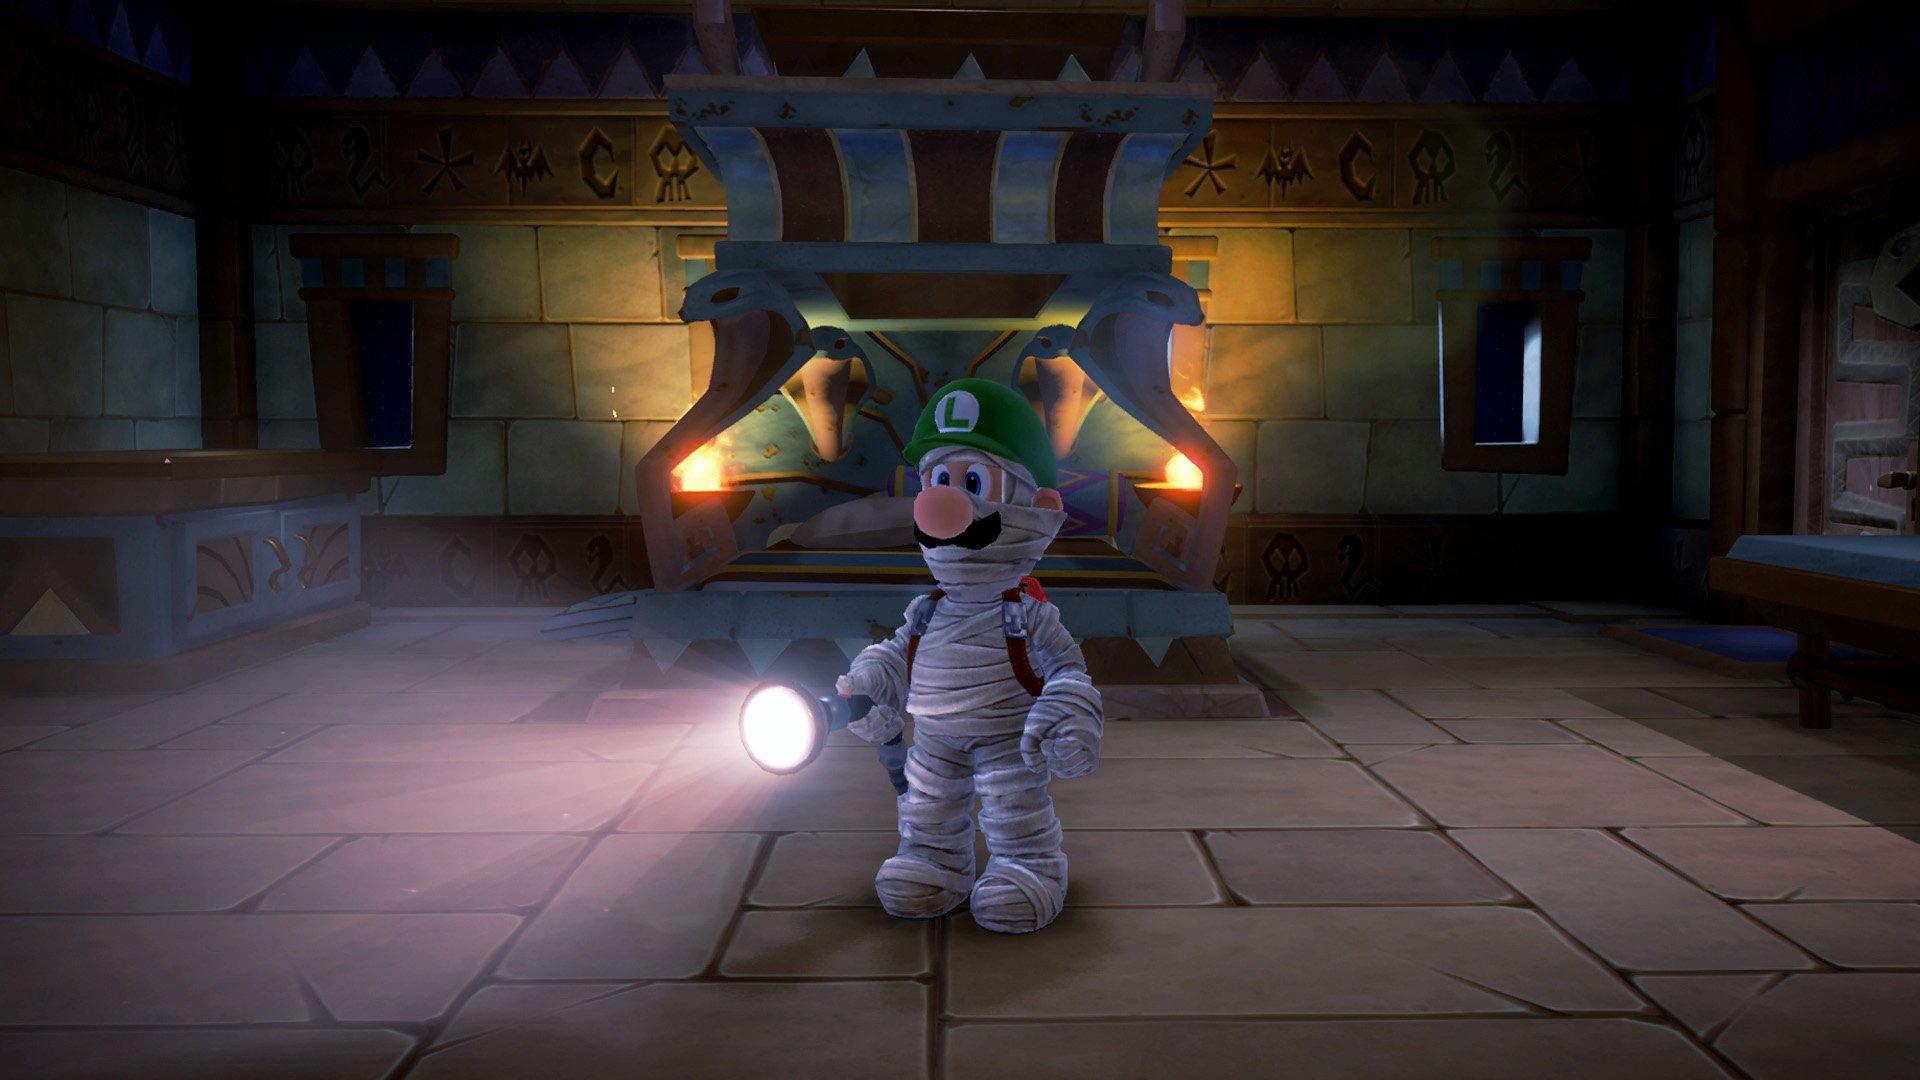 Adding Luigi and multiplayer, Lego Mario finally feels like it's